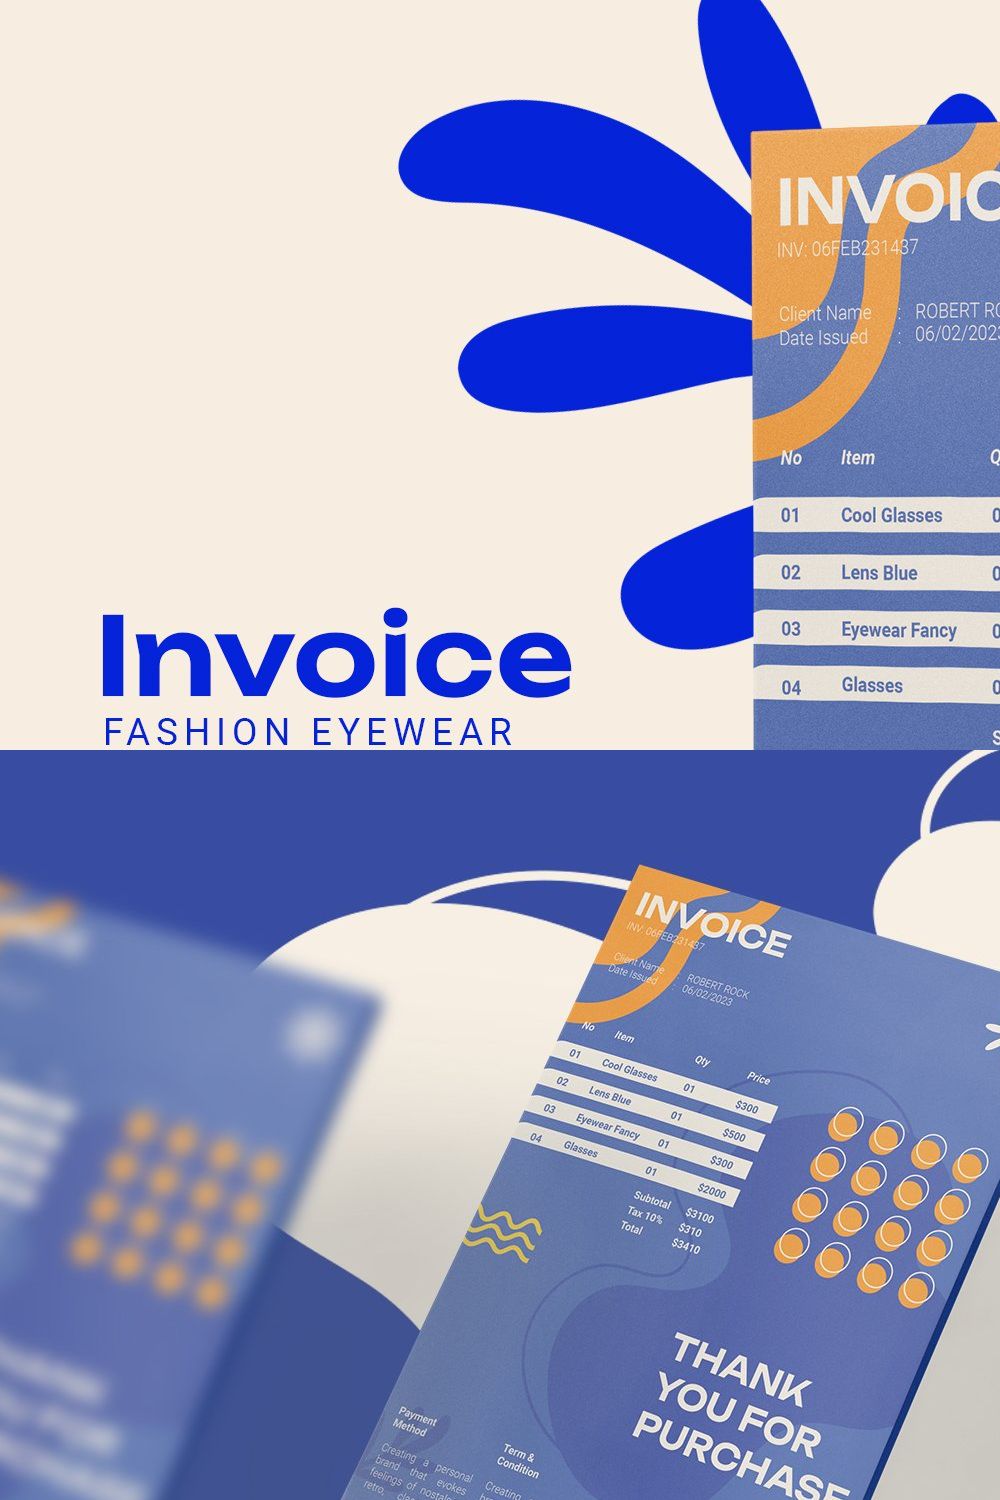 Fashion Eyewear - Invoice pinterest preview image.